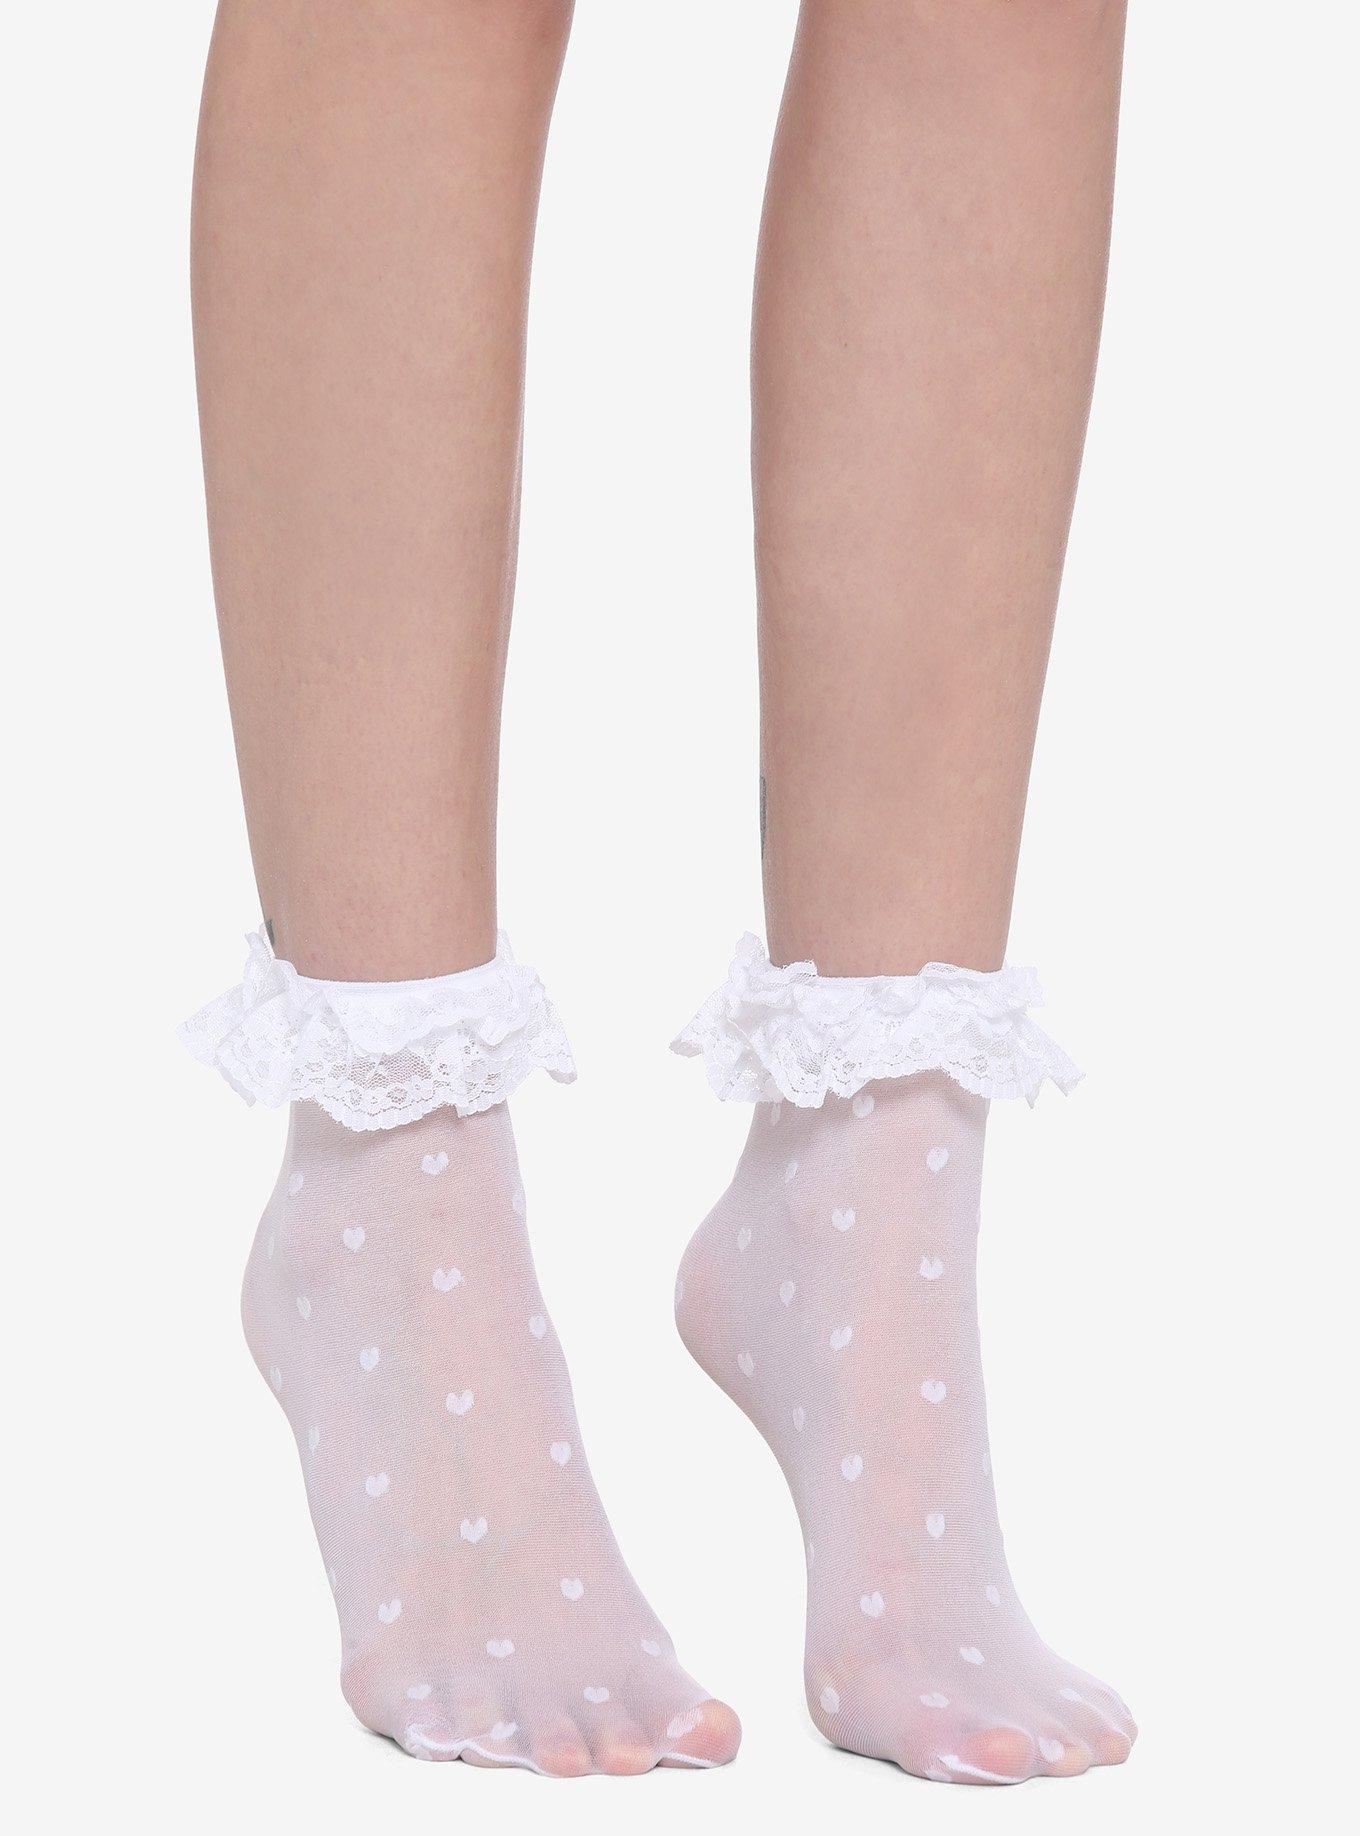 Women' Socks Ruffle Frilly Stretch Hollow White